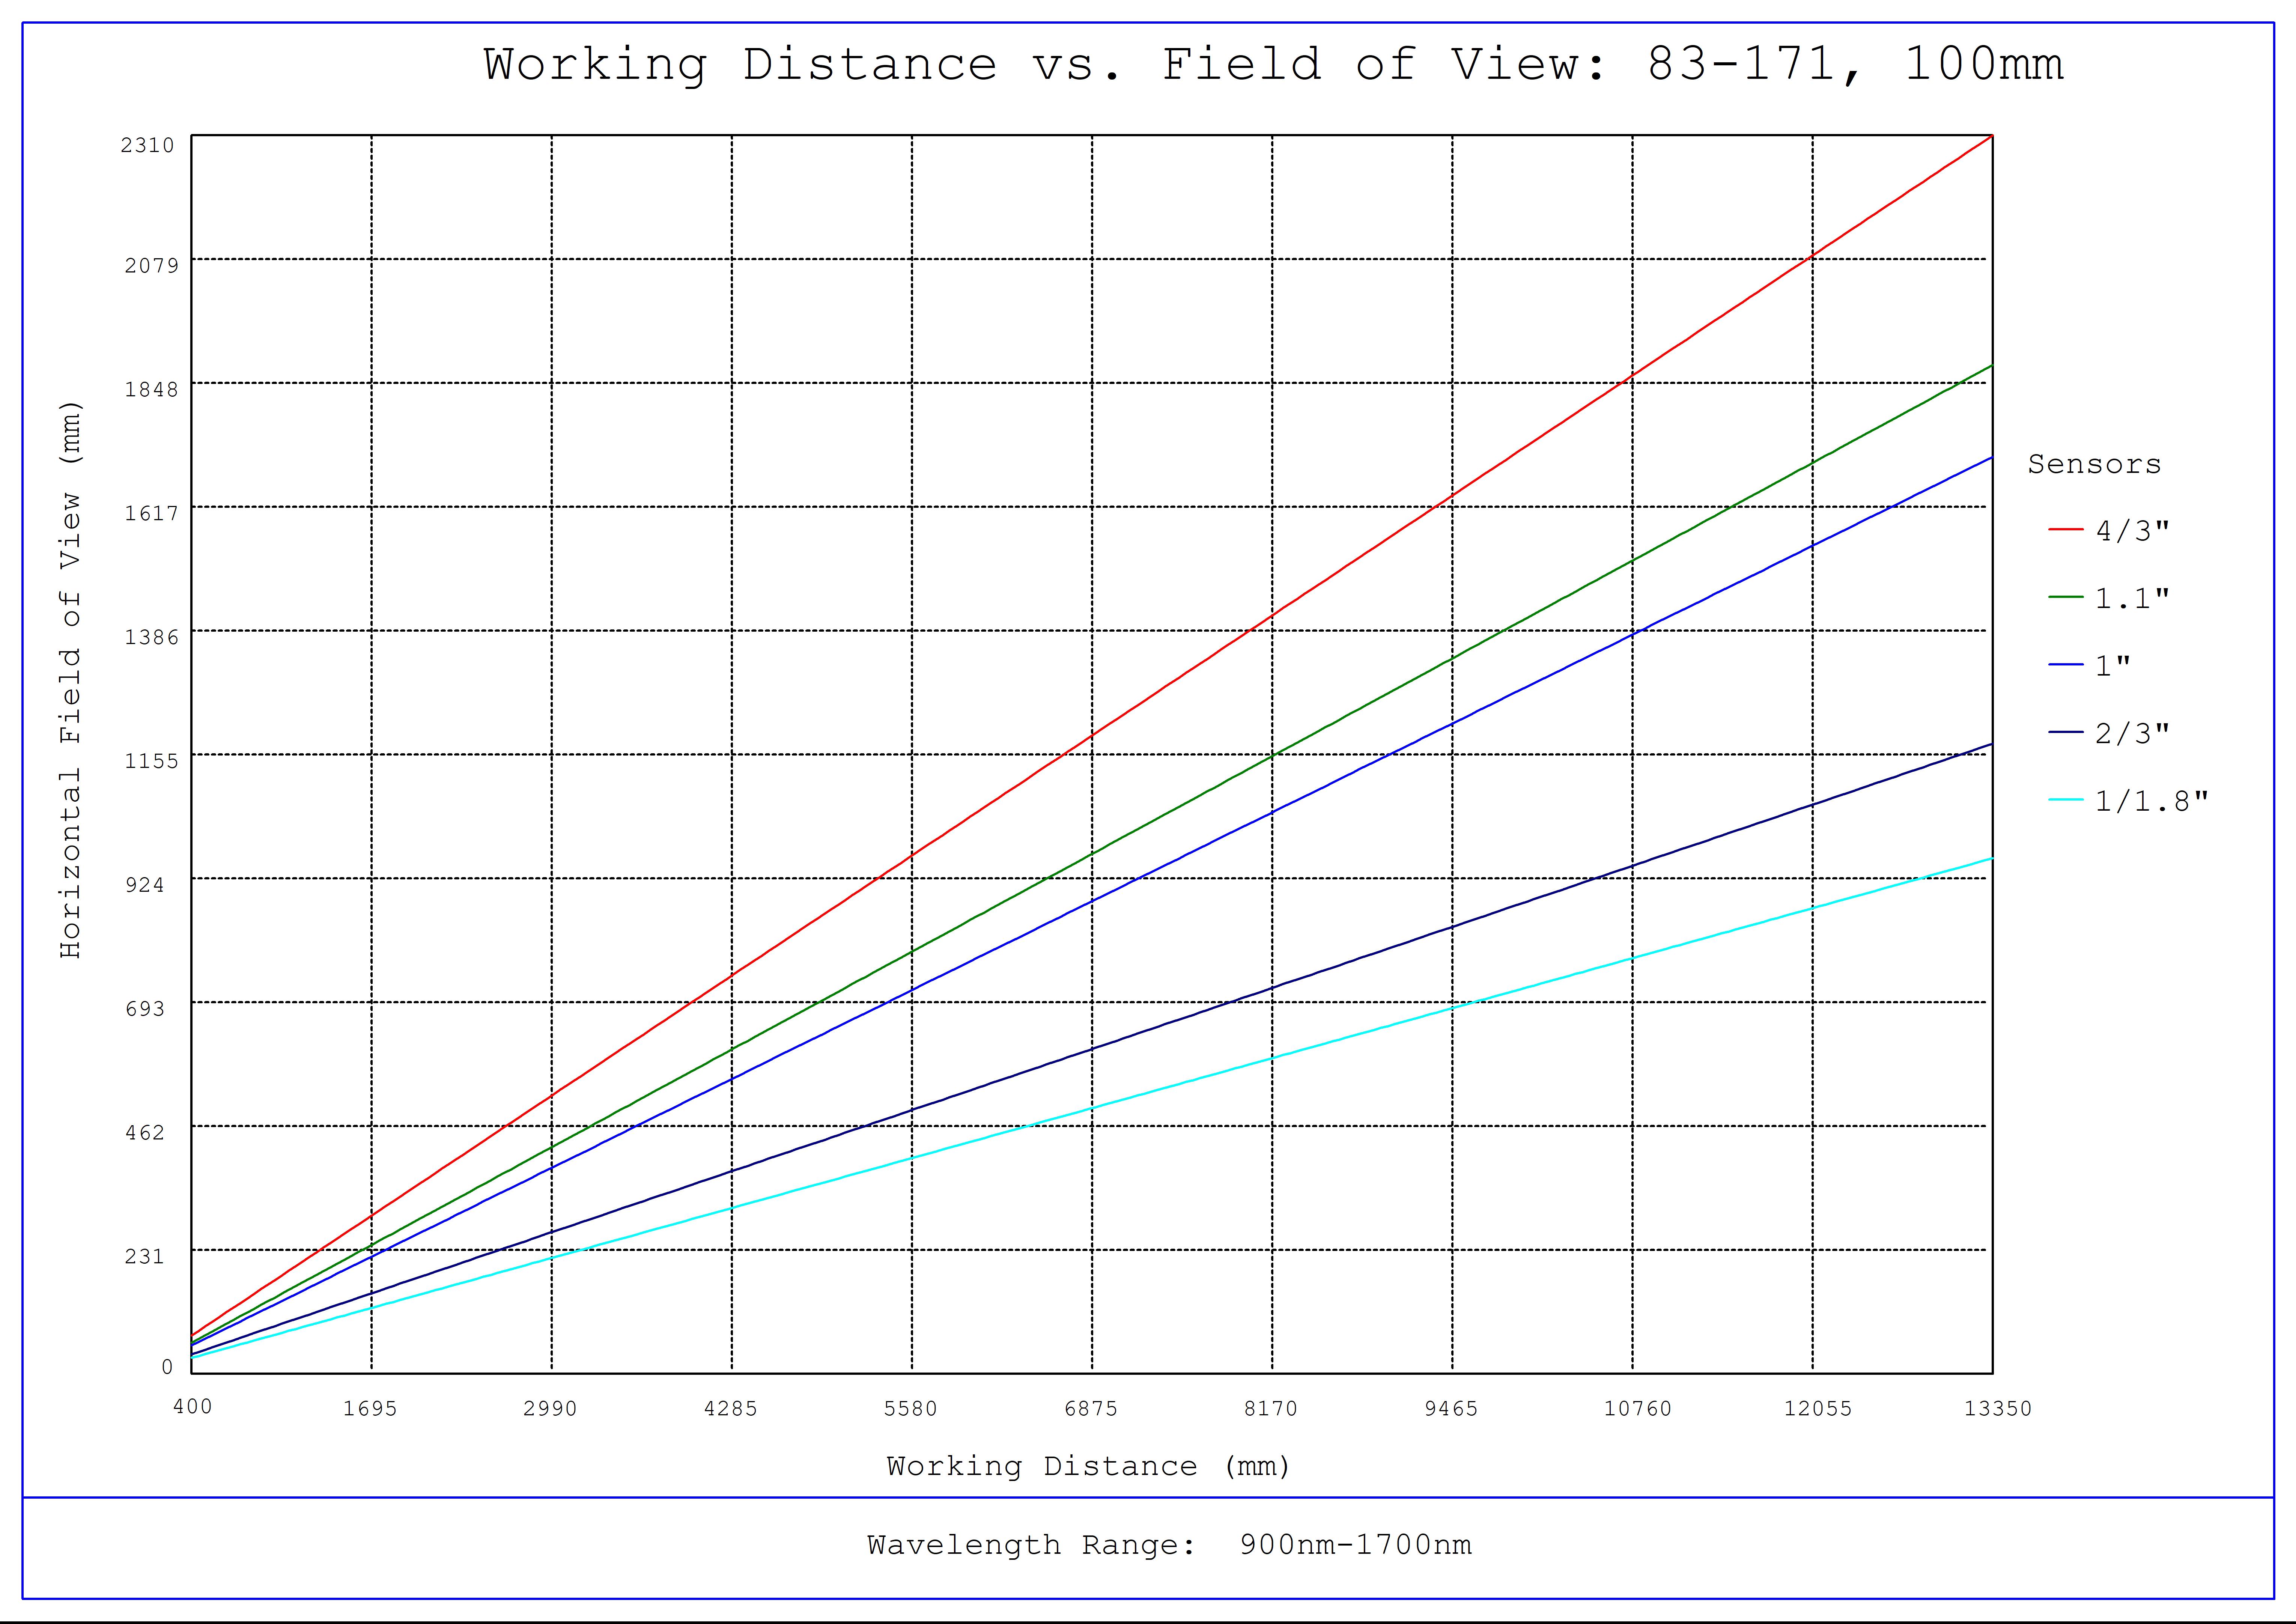 #83-171, 100mm SWIR Series Fixed Focal Length Lens, F-Mount, Working Distance versus Field of View Plot